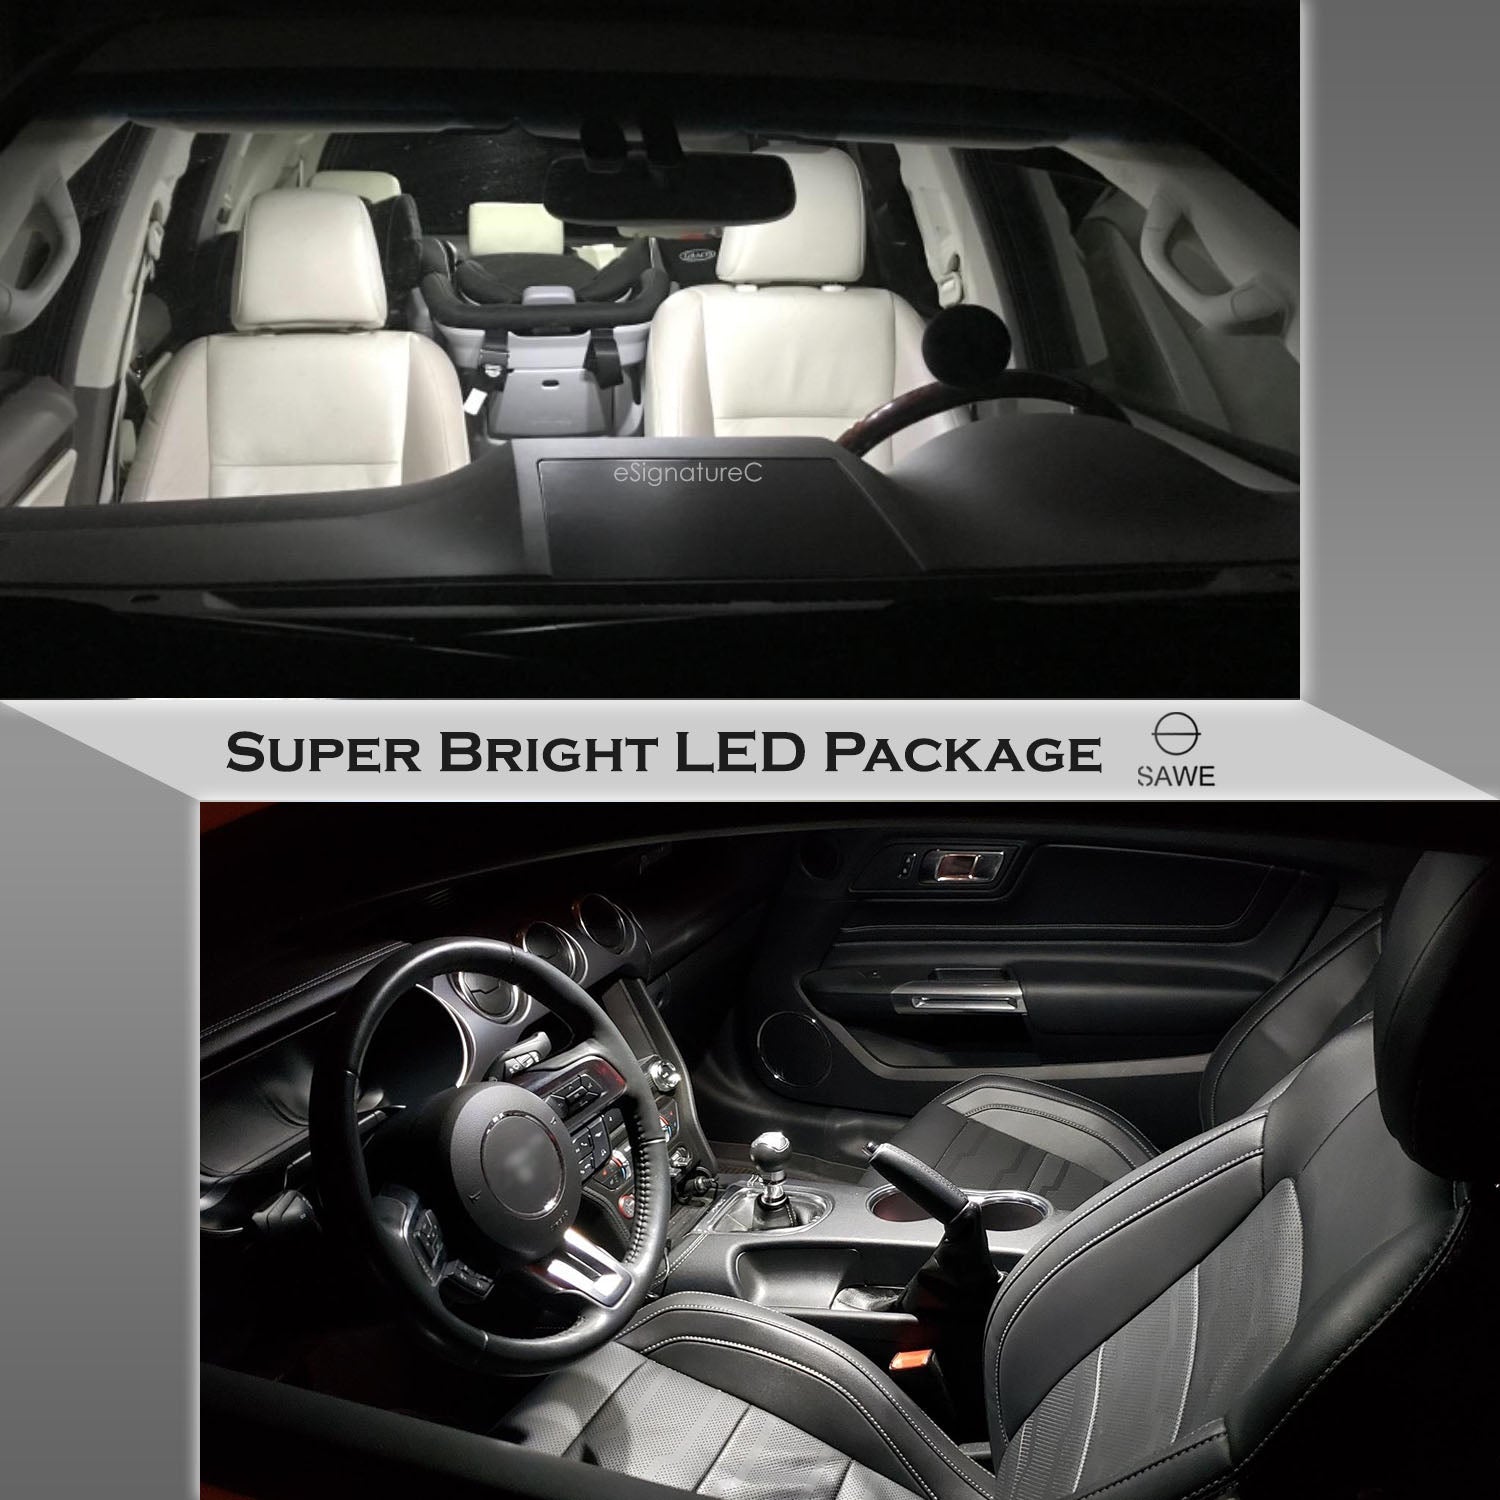 For Dodge Ram 1500 2500 3500 Interior LED Lights - Dome & Map Lights Package Kit for 2011 - 2018 - White